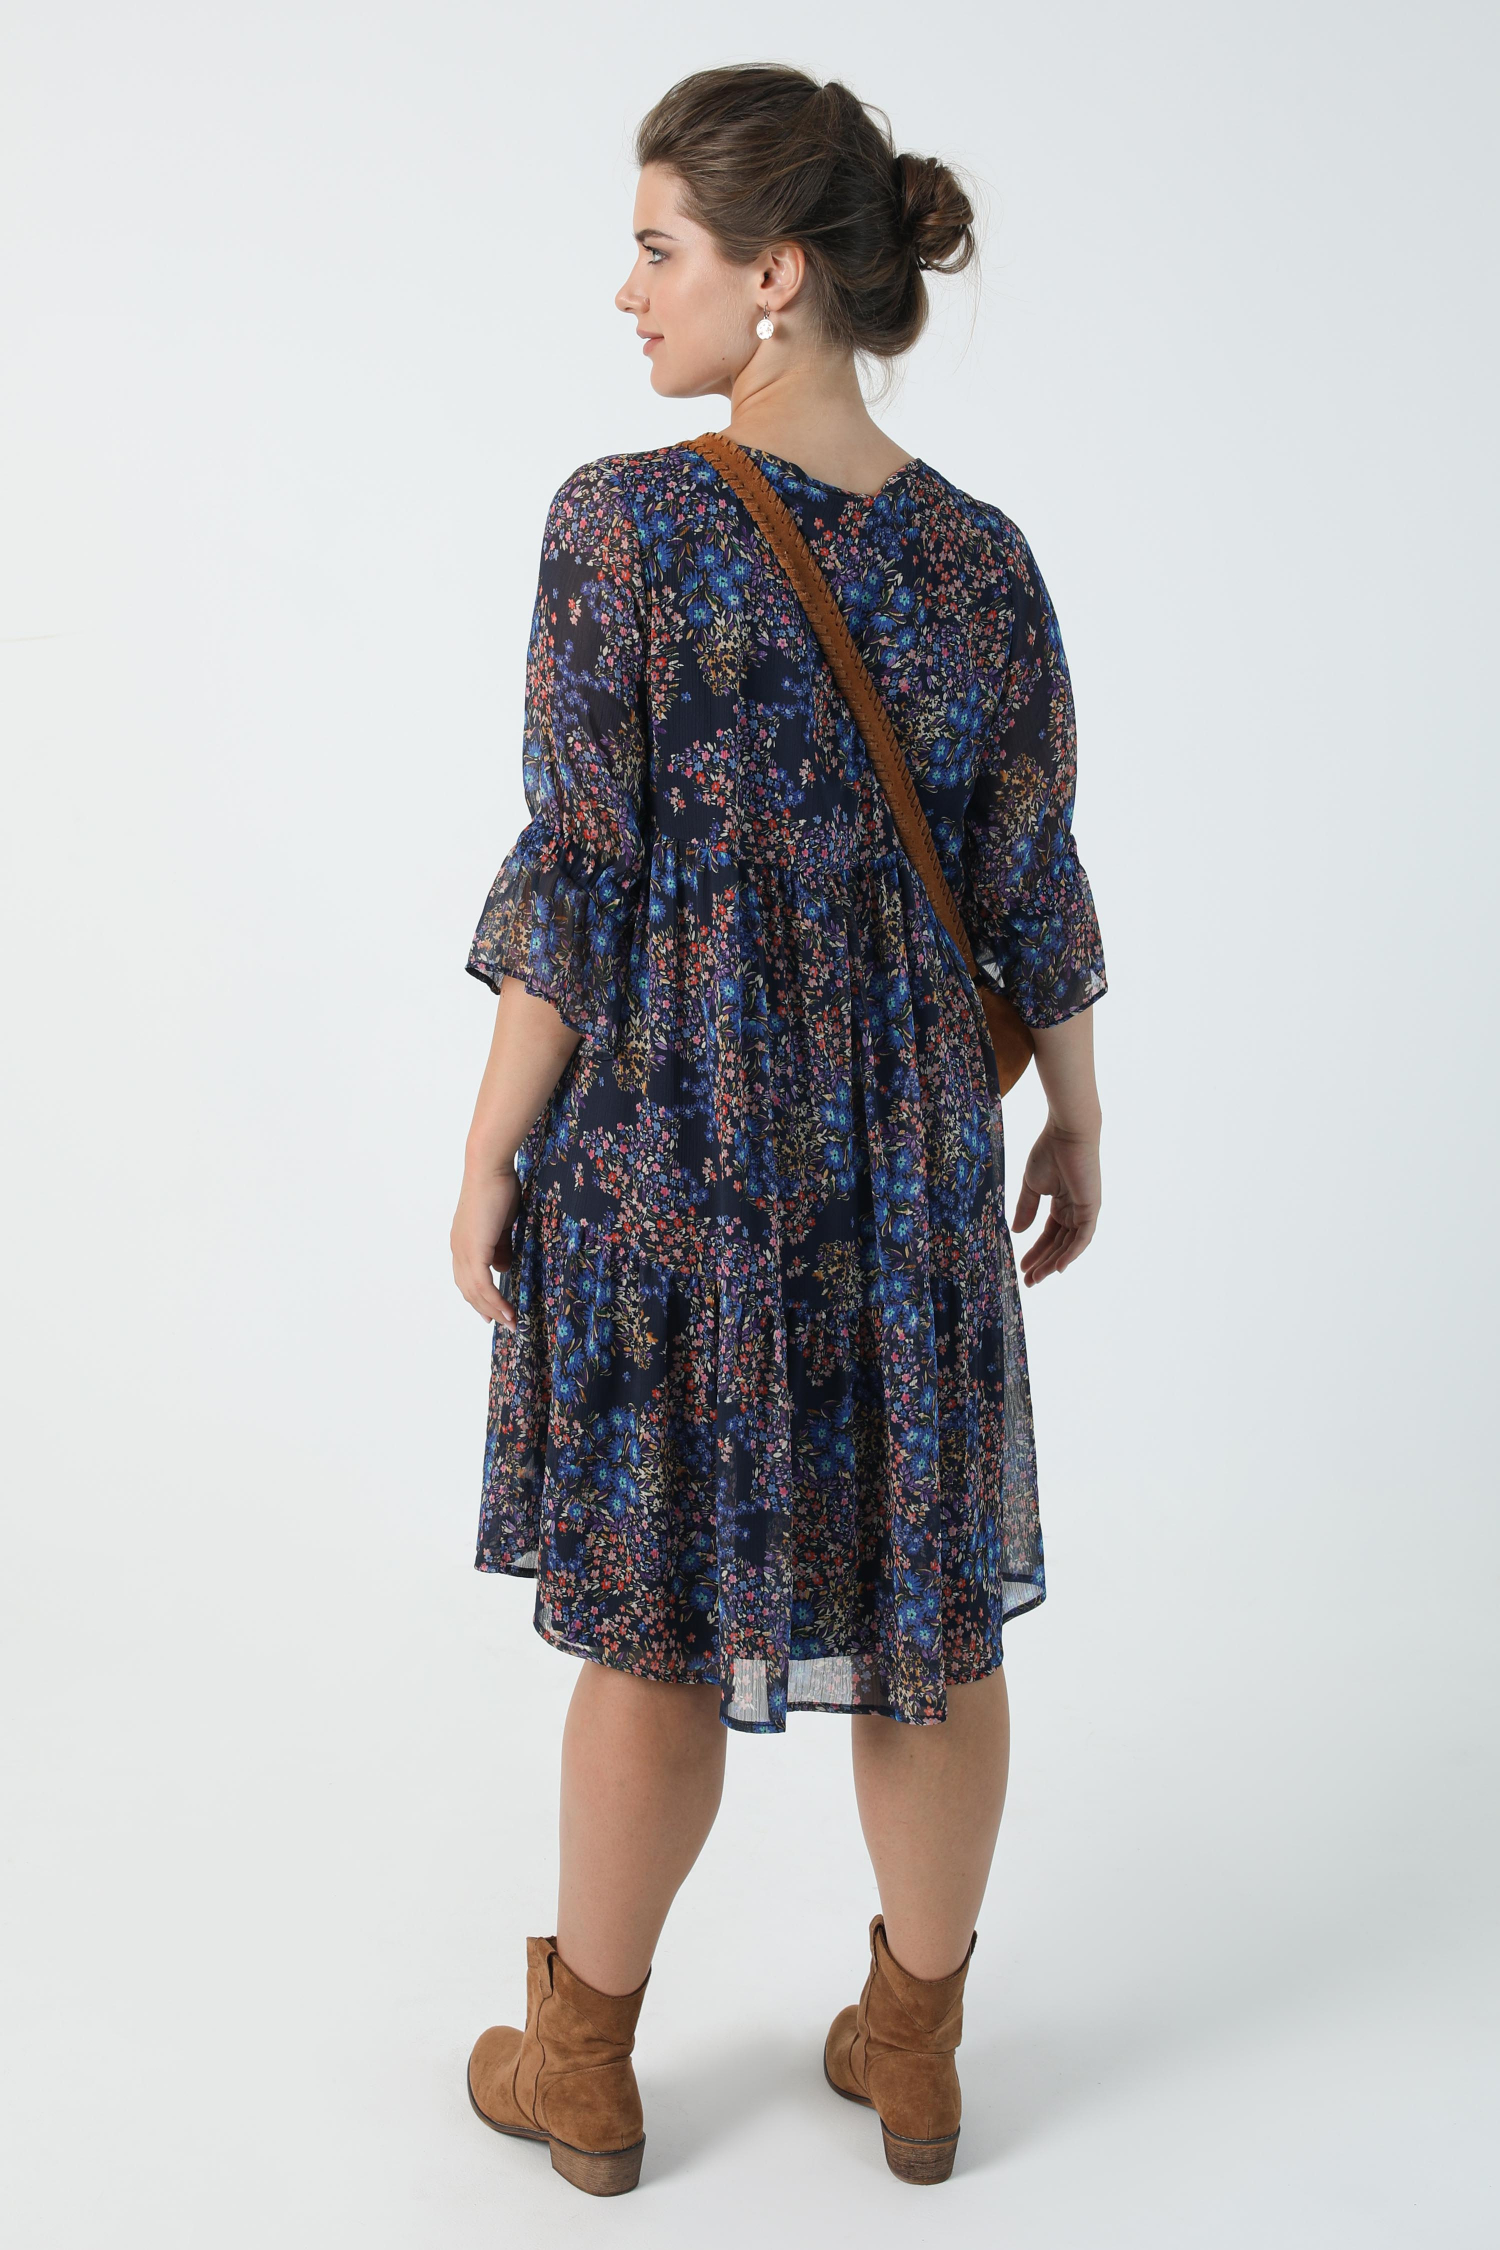 Bohemian style mid-length dress in veil printed with oeko-tex fabric